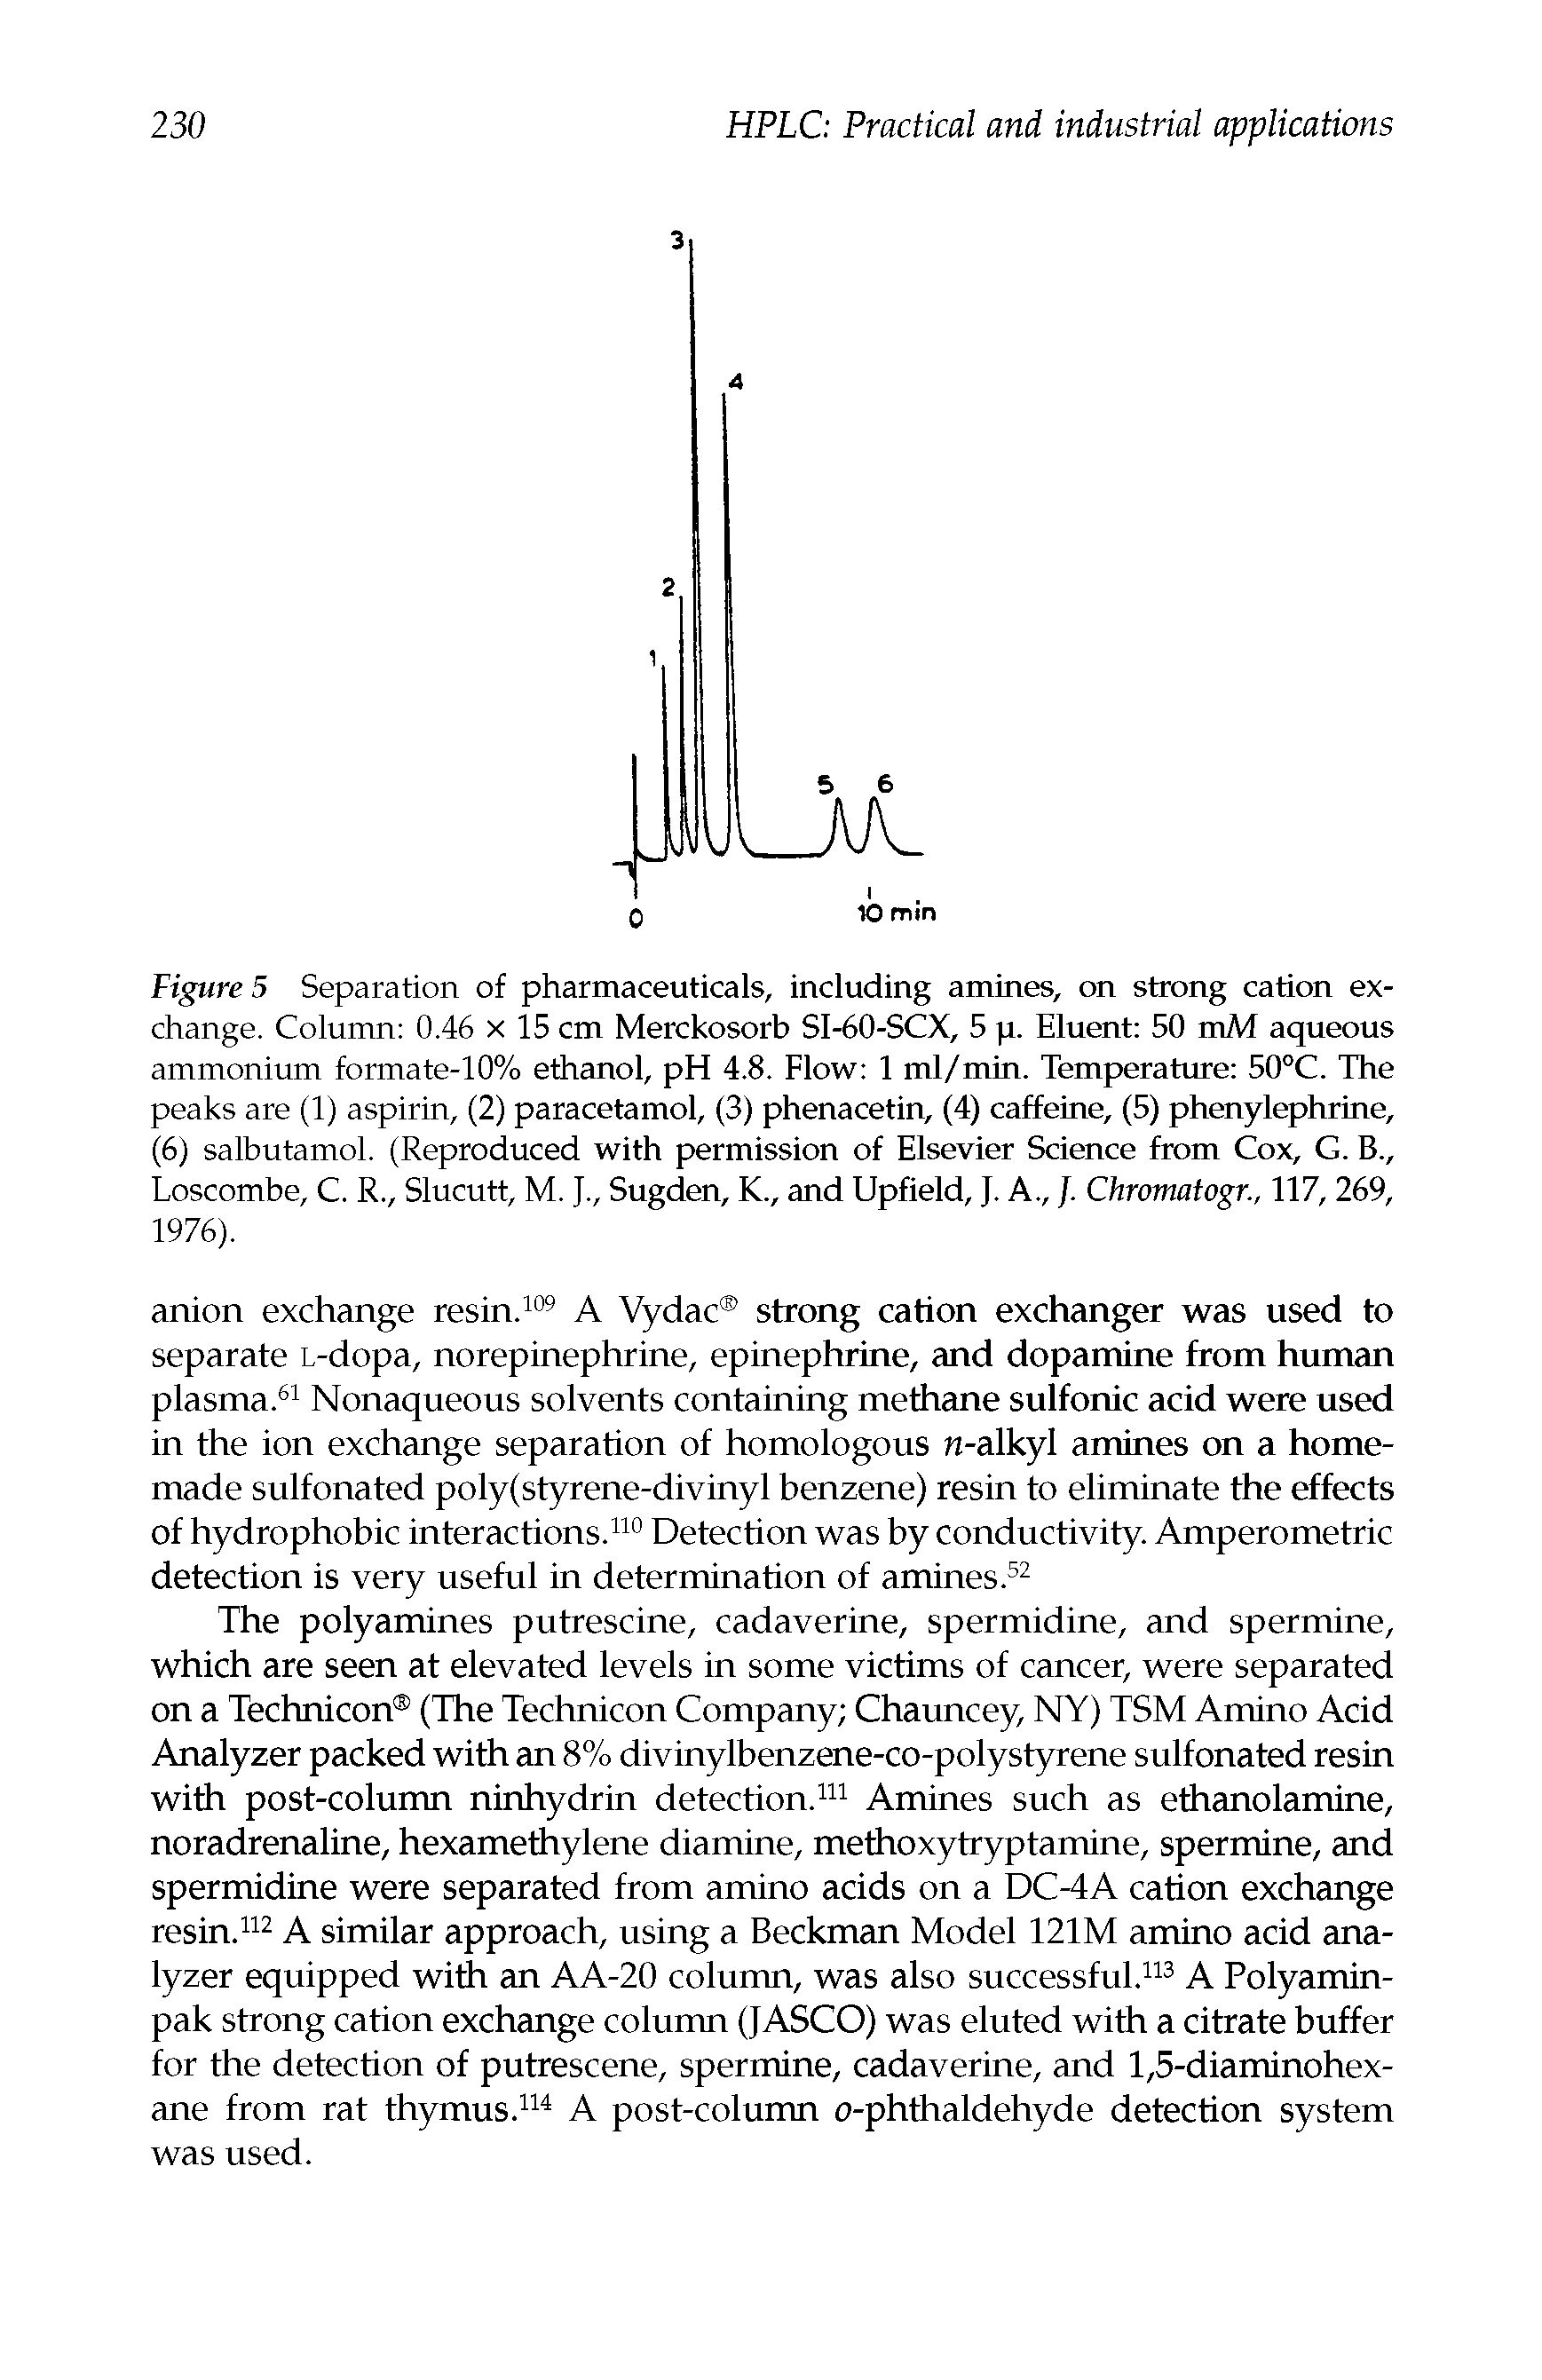 Figure 5 Separation of pharmaceuticals, including amines, on strong cation exchange. Column 0.46 x 15 cm Merckosorb SI-60-SCX, 5 p. Eluent 50 mM aqueous ammonium formate-10% ethanol, pH 4.8. Flow 1 ml/min. Temperature 50°C. The peaks are (1) aspirin, (2) paracetamol, (3) phenacetin, (4) caffeine, (5) phenylephrine, (6) salbutamol. (Reproduced with permission of Elsevier Science from Cox, G. B., Loscombe, C. R., Slucutt, M. J., Sugden, K., and Upheld, J. A., /. Chromatogr., 117, 269, 1976).